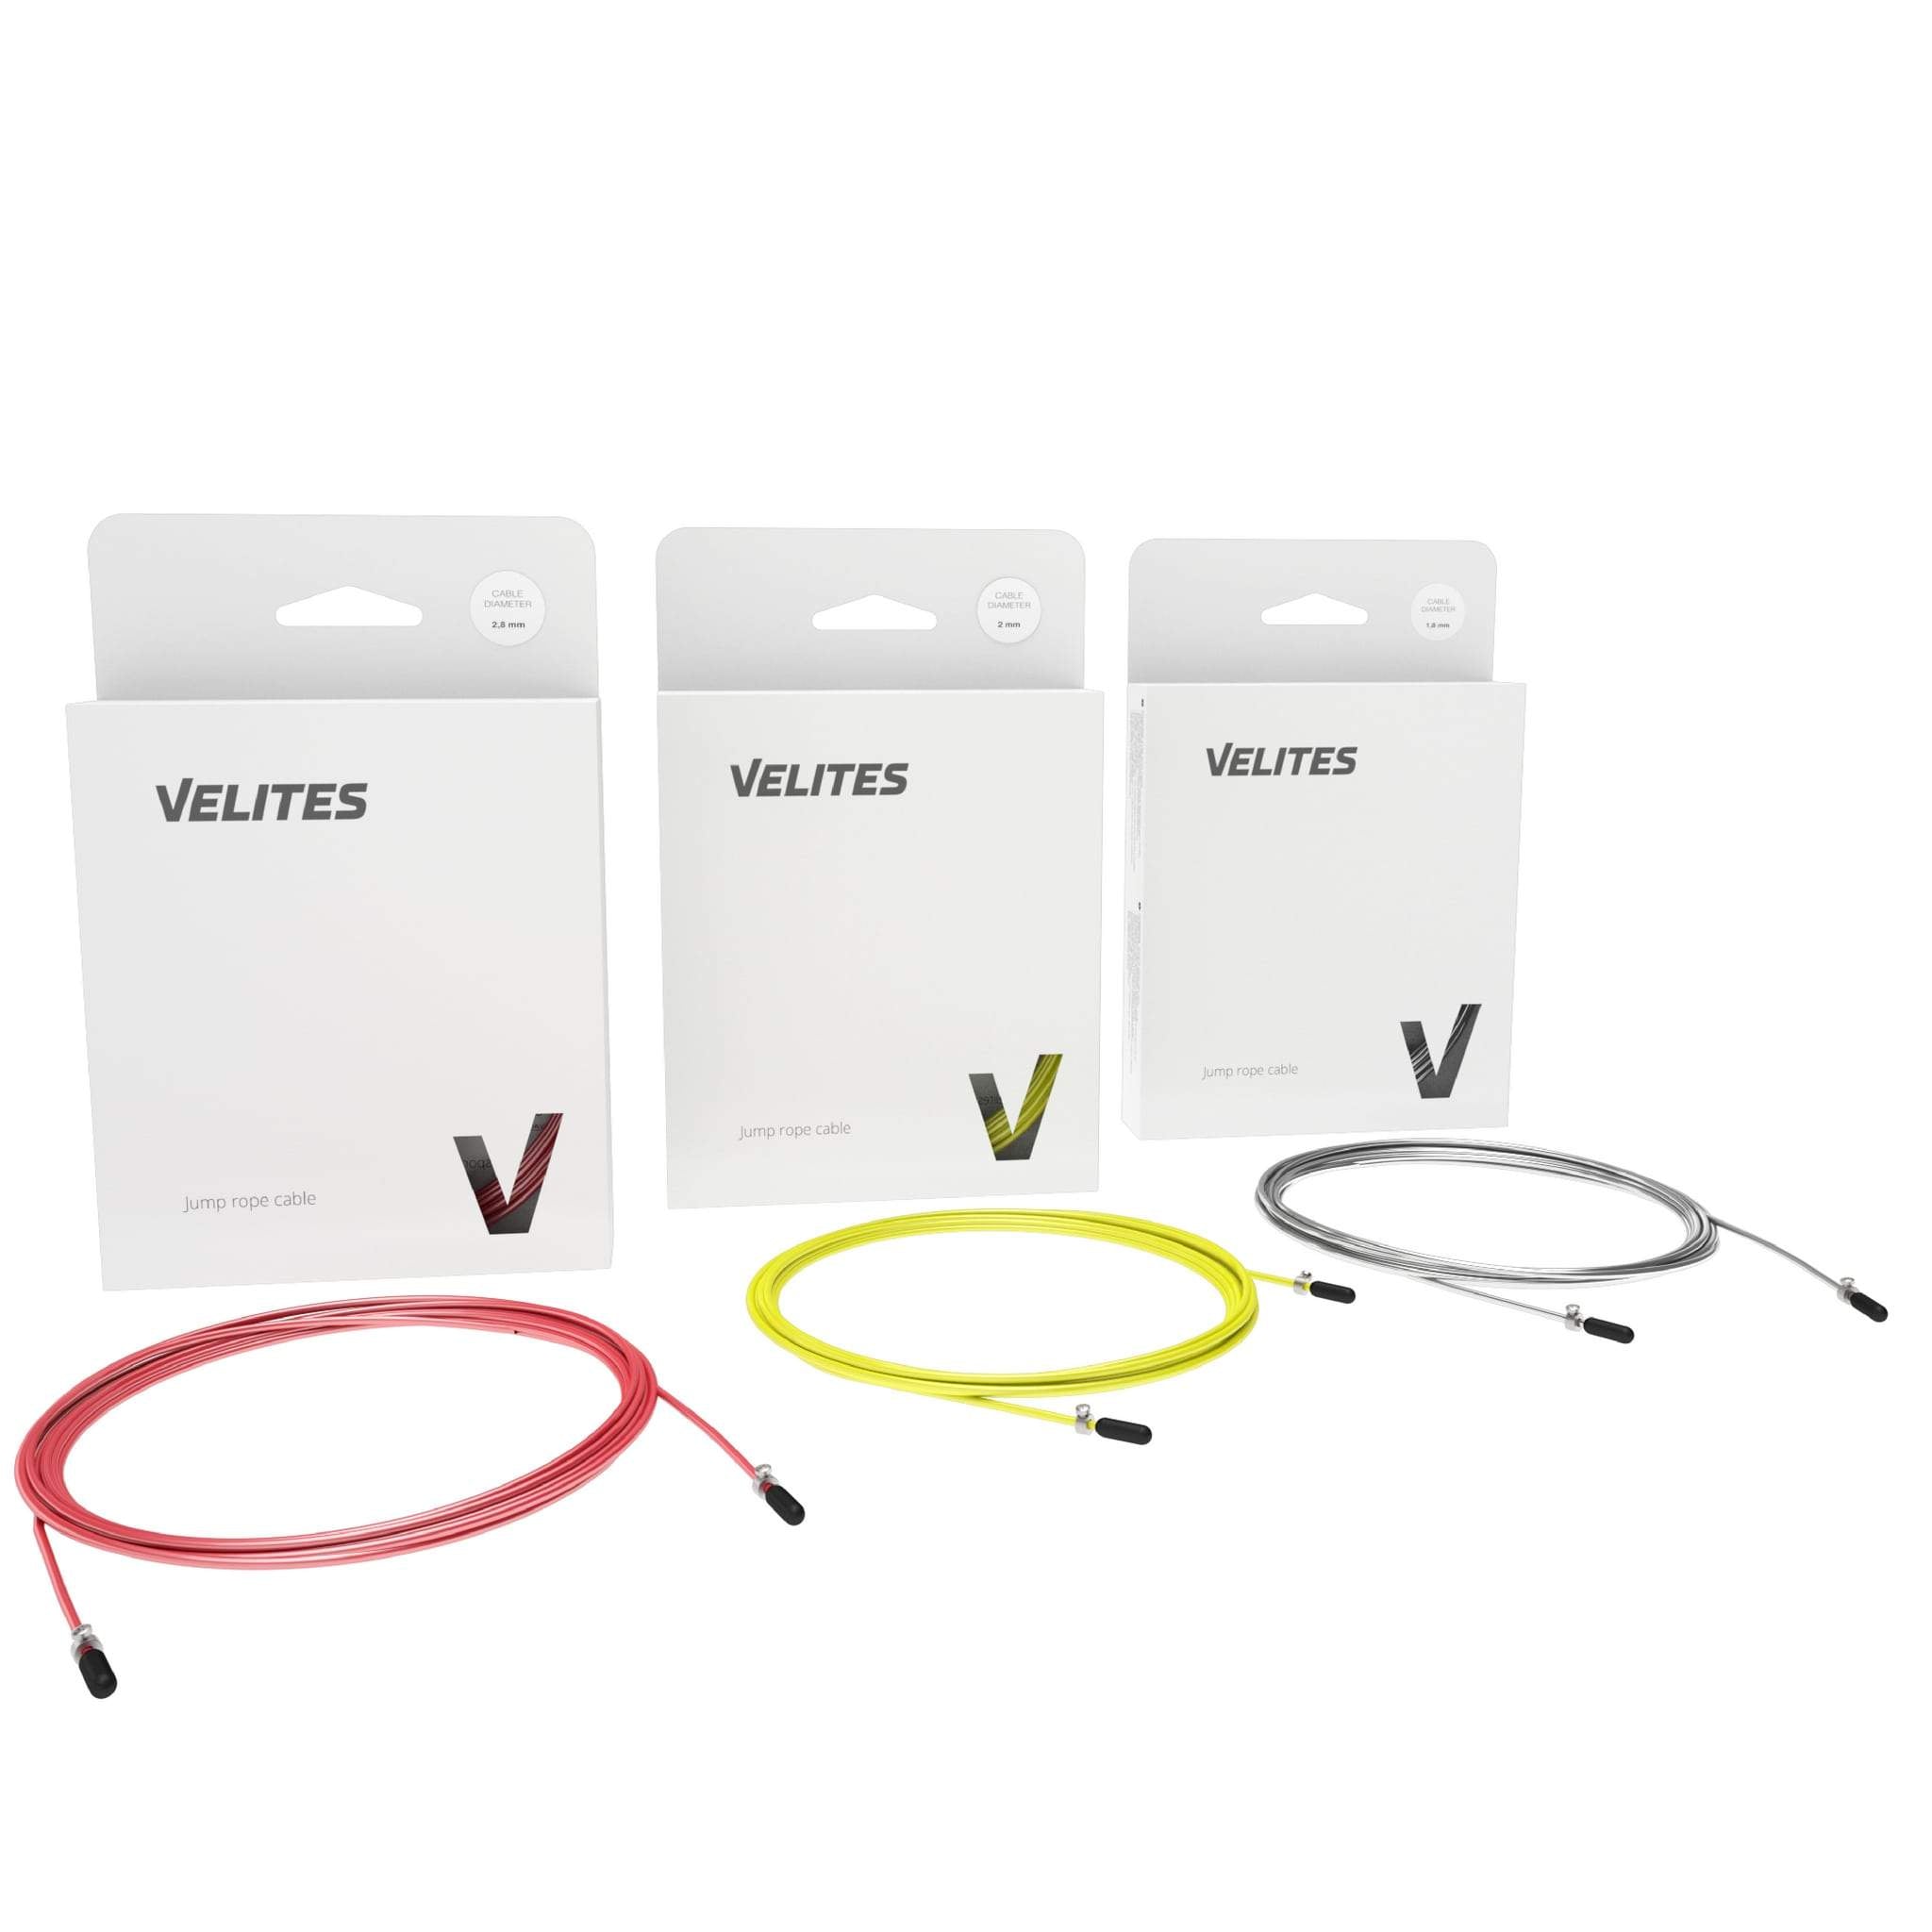 Velites Pack Comba Earth 2.0 + Lastres + Cables + Mat (Kamo) : :  Deportes y aire libre